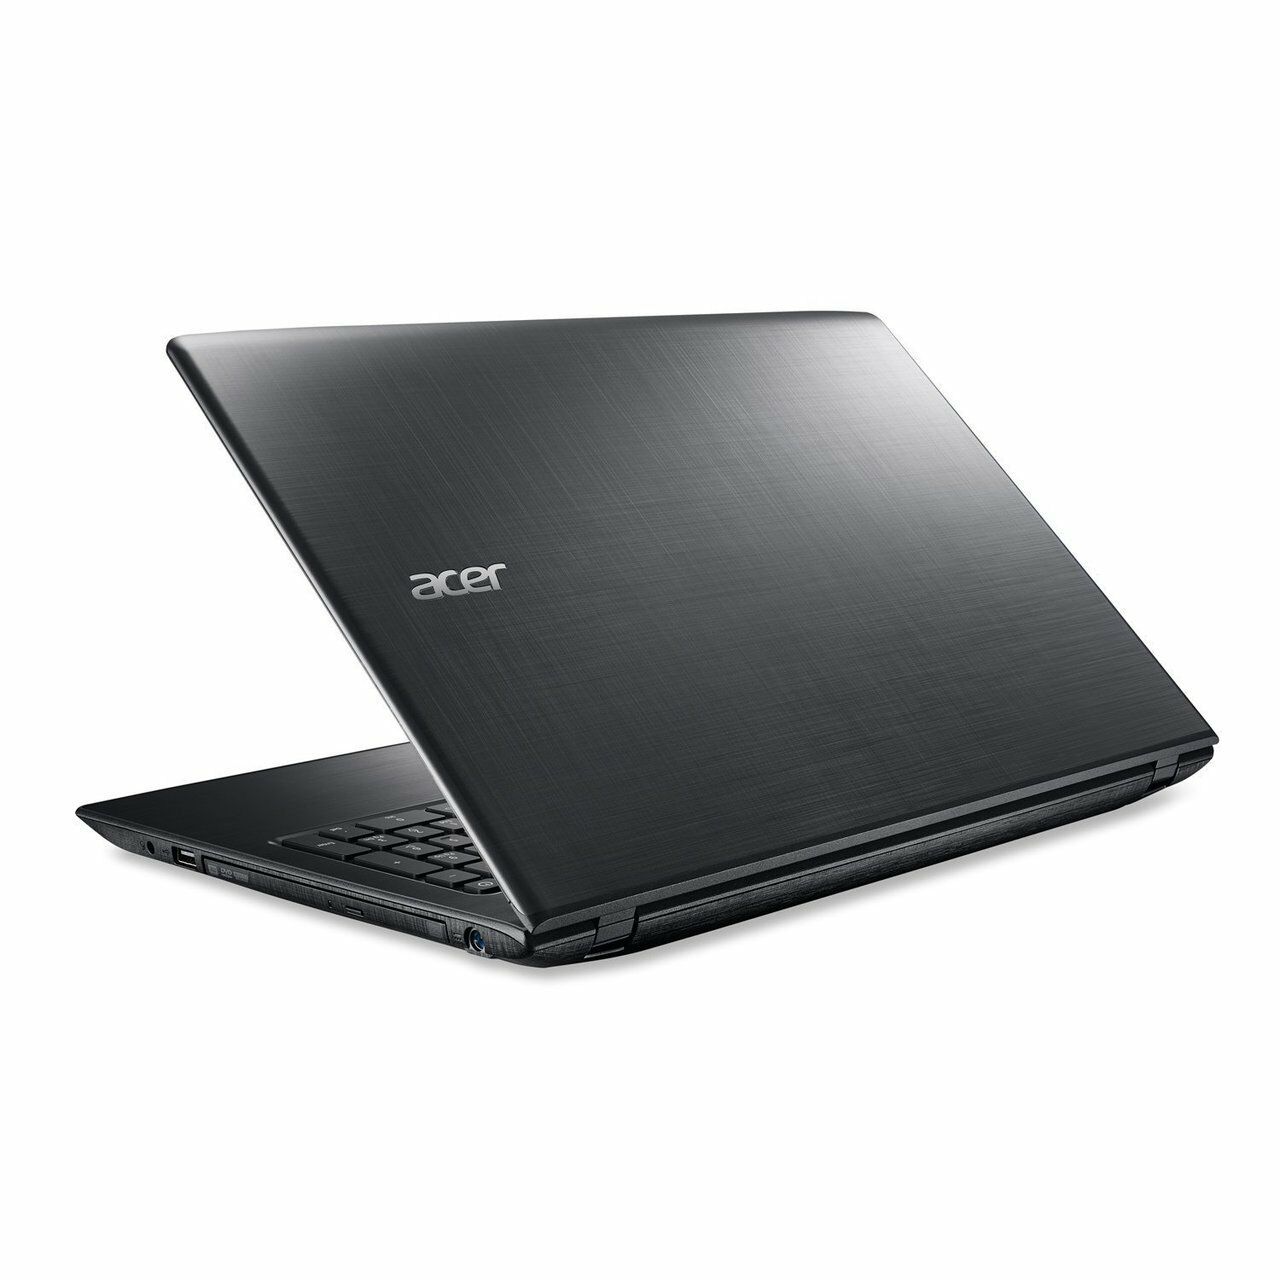 FaschingskostÃ¼me Billig Inspirierend New Acer Laptop Intel Core I U 310ghz 6gb 1tb Hd 156